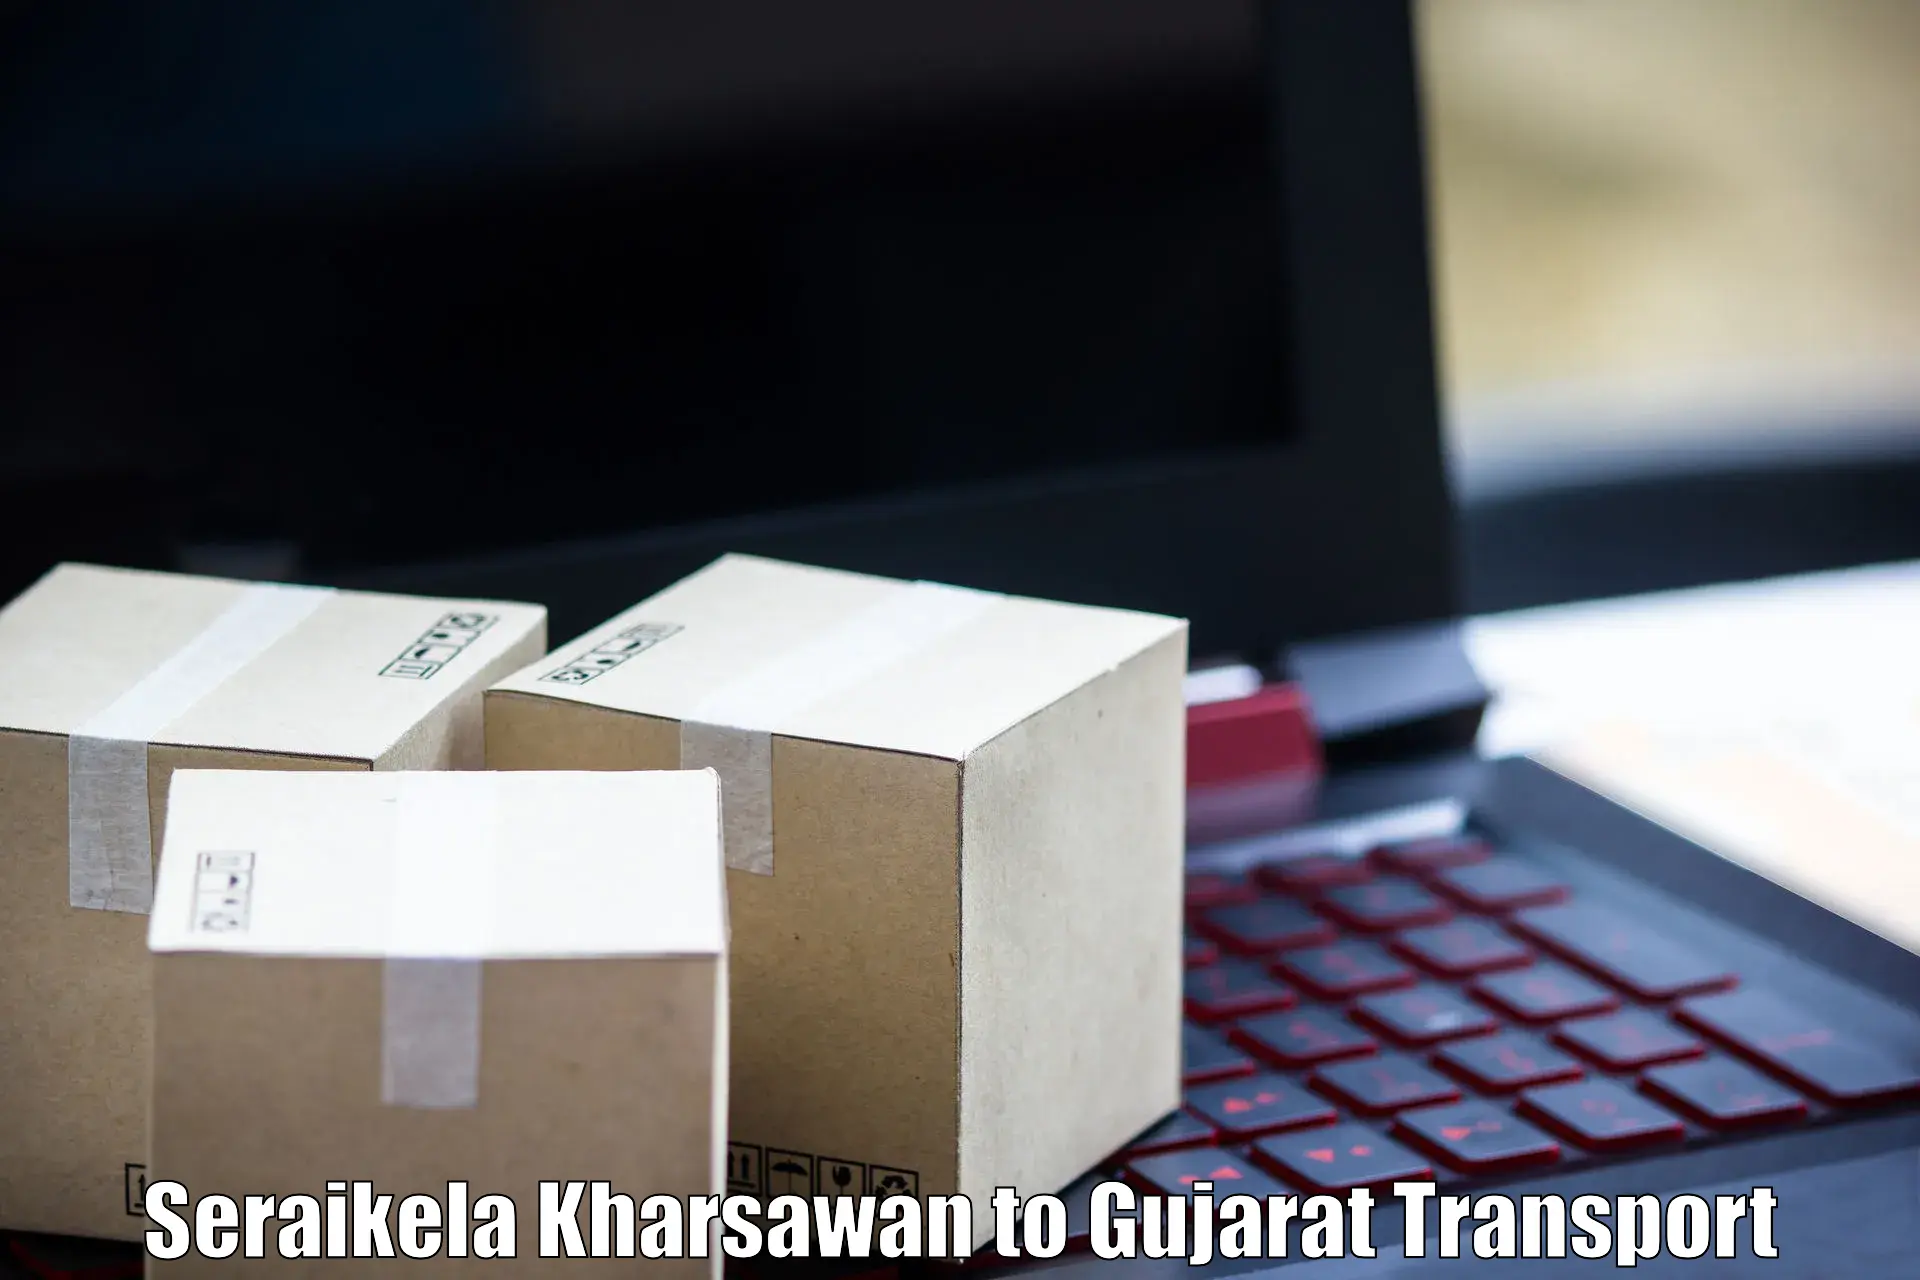 Goods delivery service Seraikela Kharsawan to GIDC